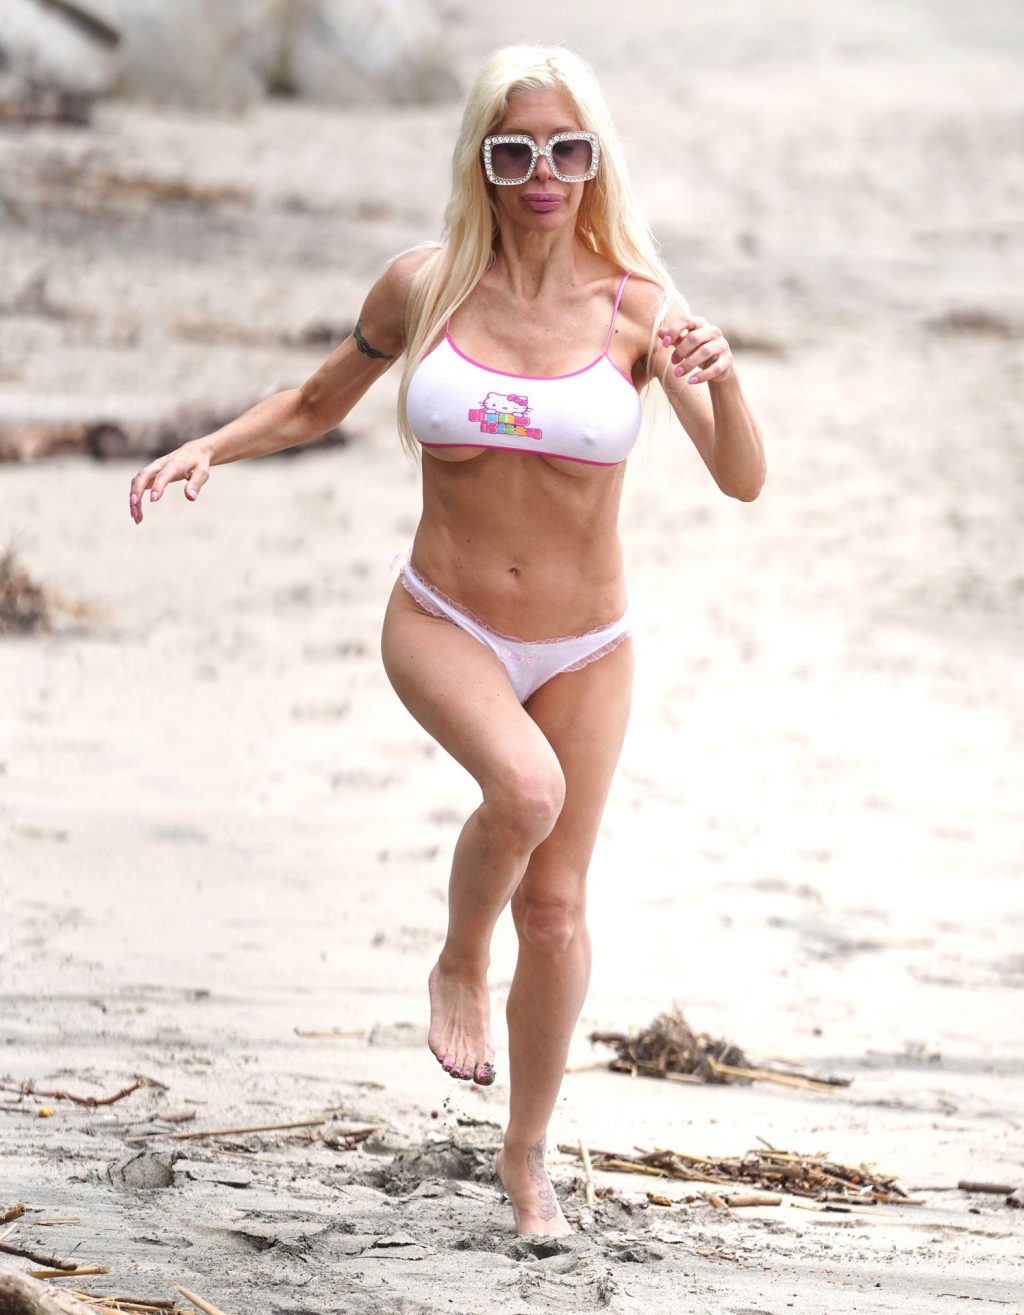 Angelique Morgan Walks on the Deserted Beach in Malibu (42 Photos)